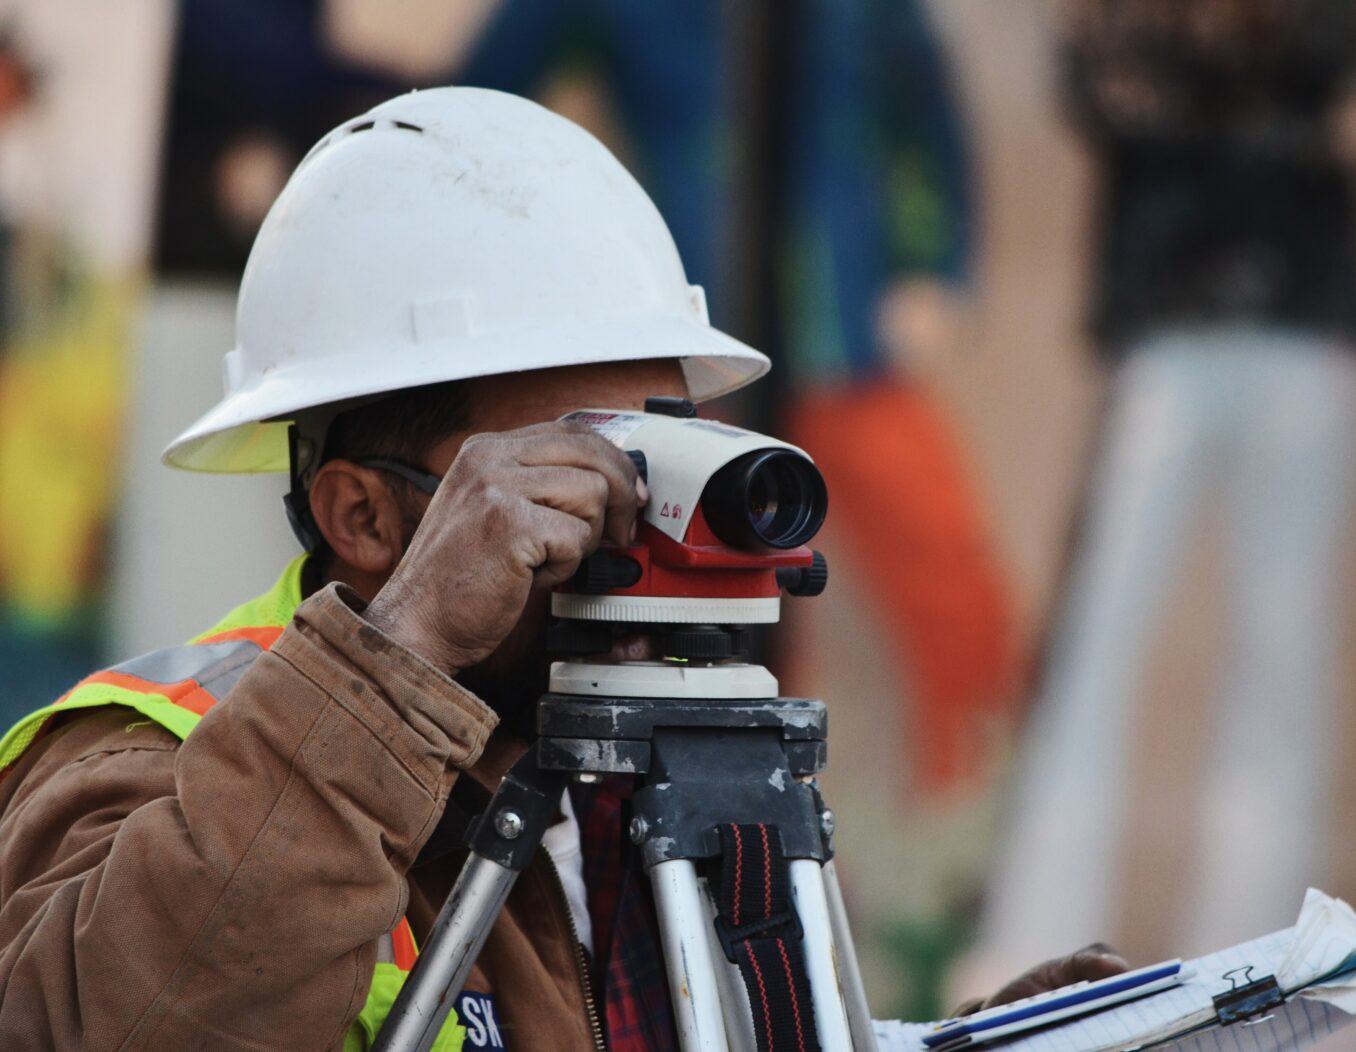 Site surveyor looking through camera